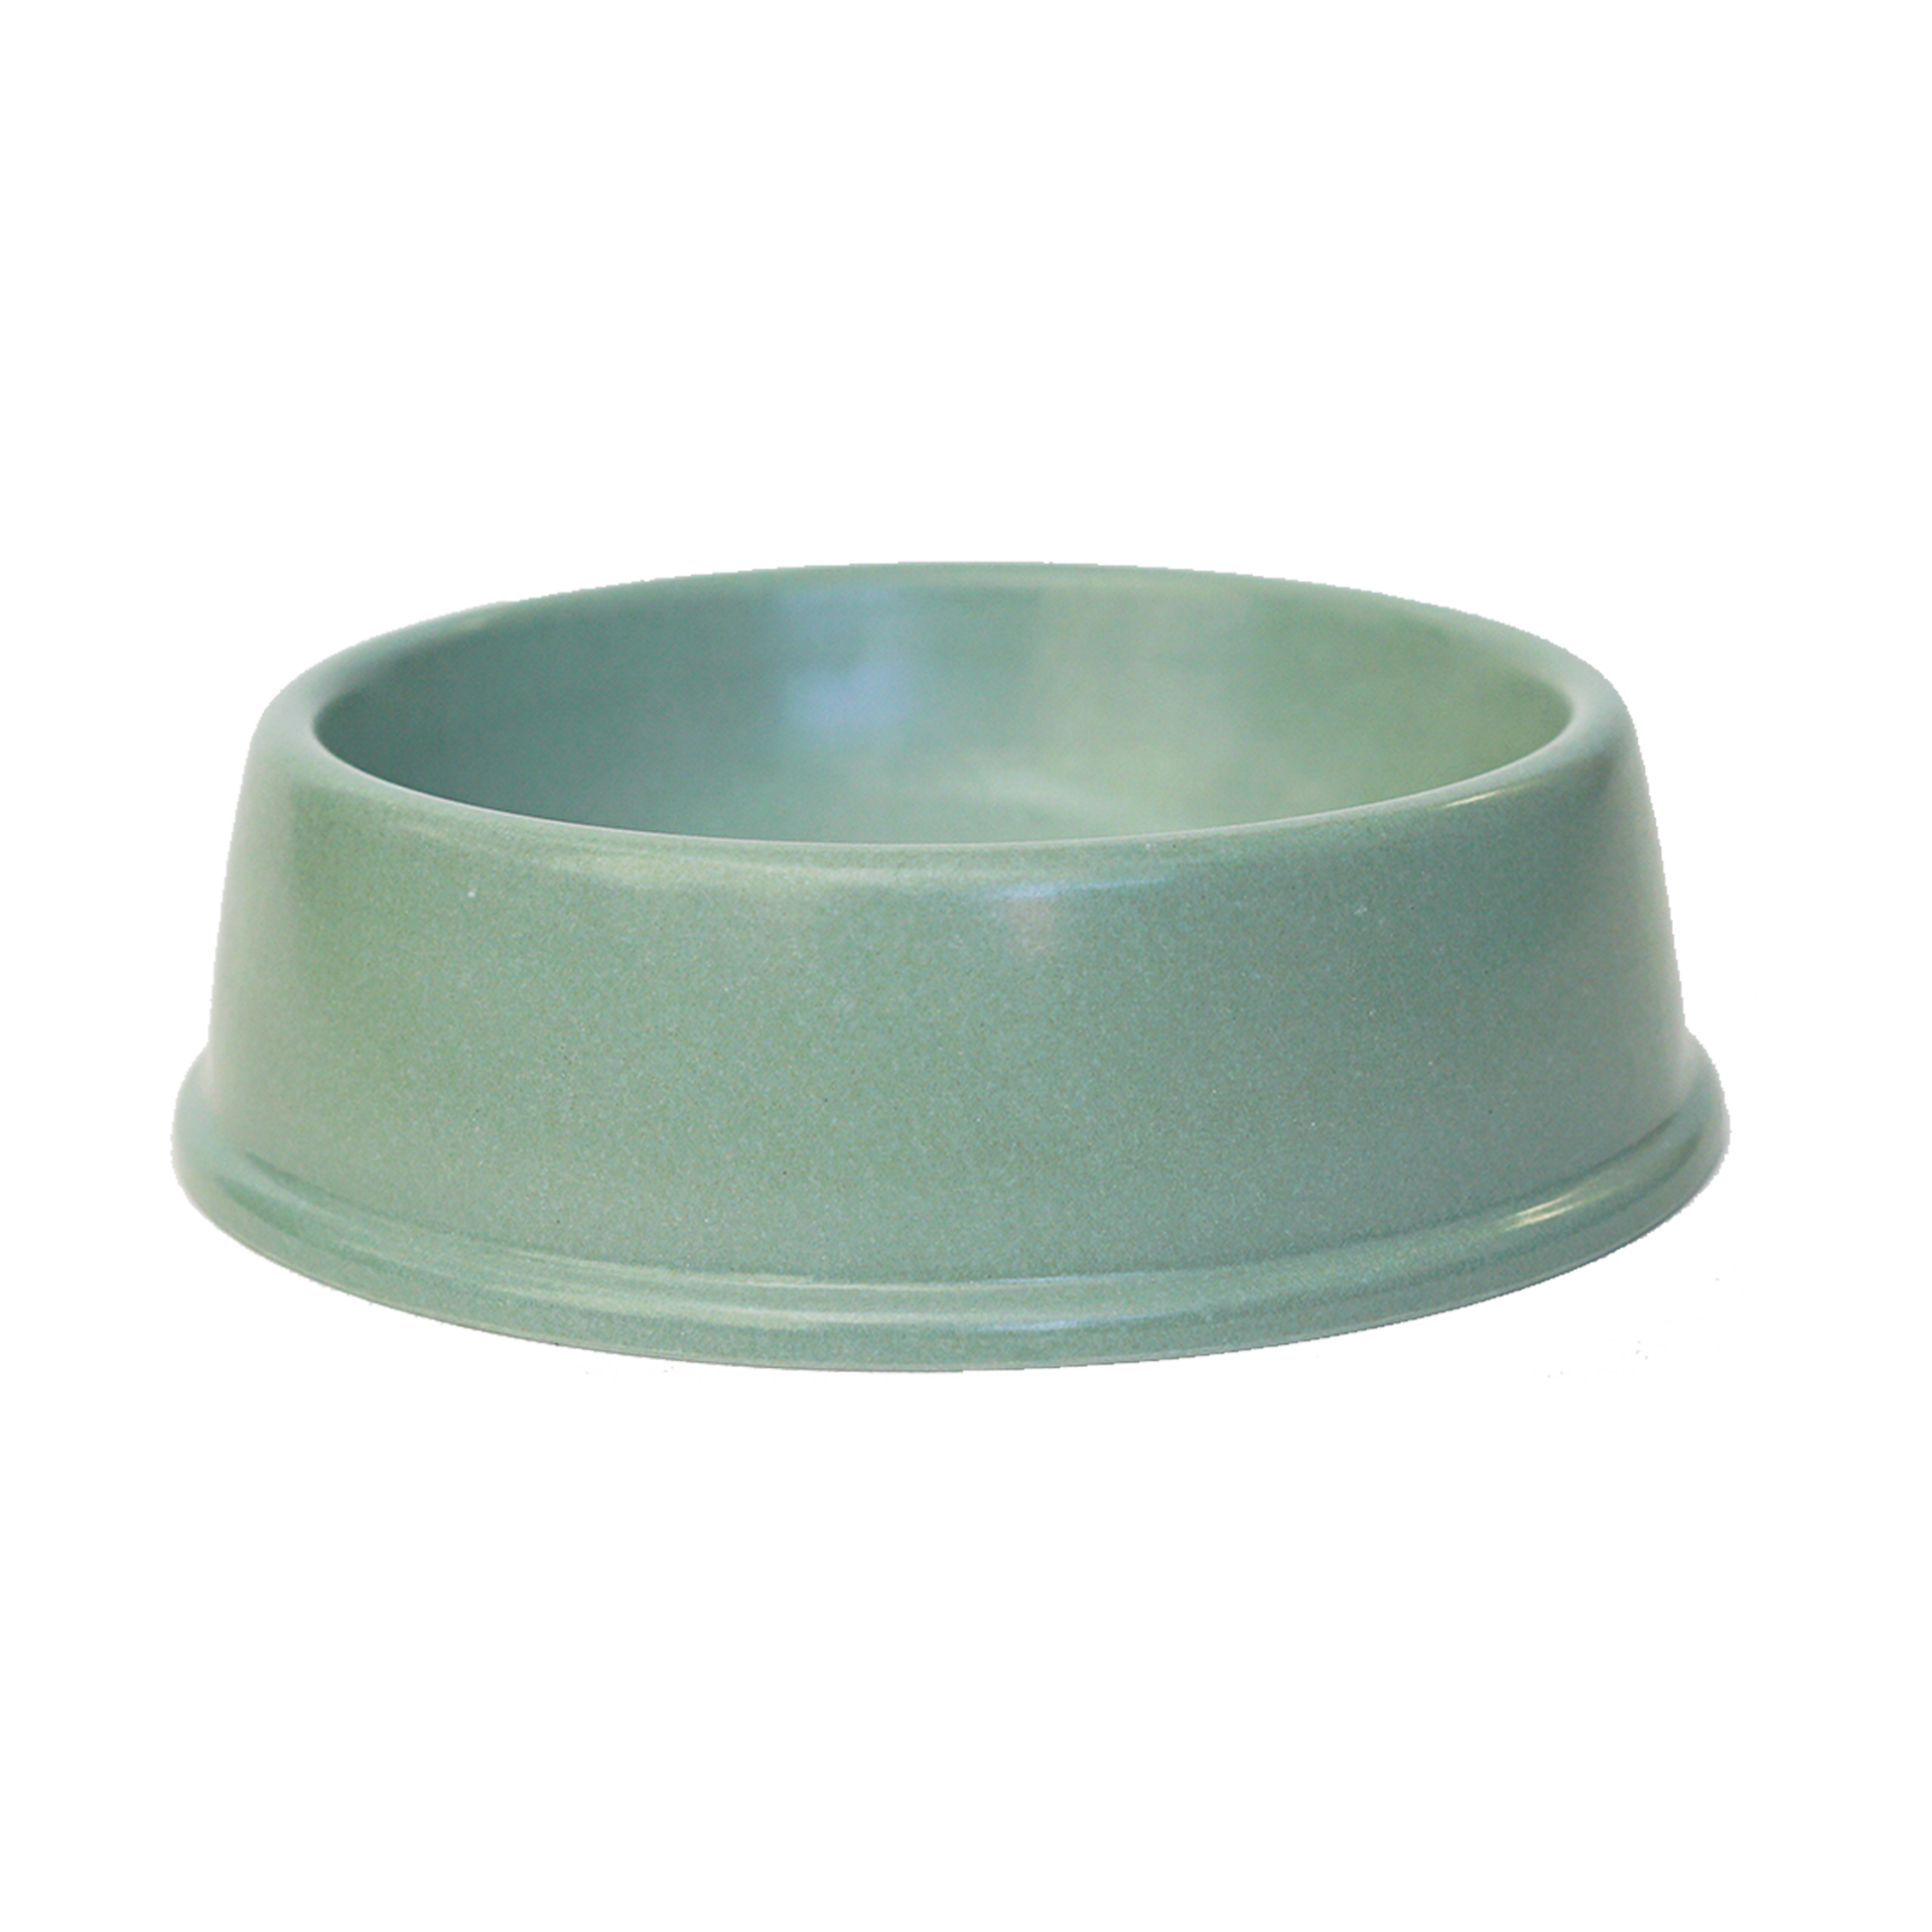 Dog bowls - Large Plastic Dog Bowl - Puppy bowls - 4 pack - Color may vary